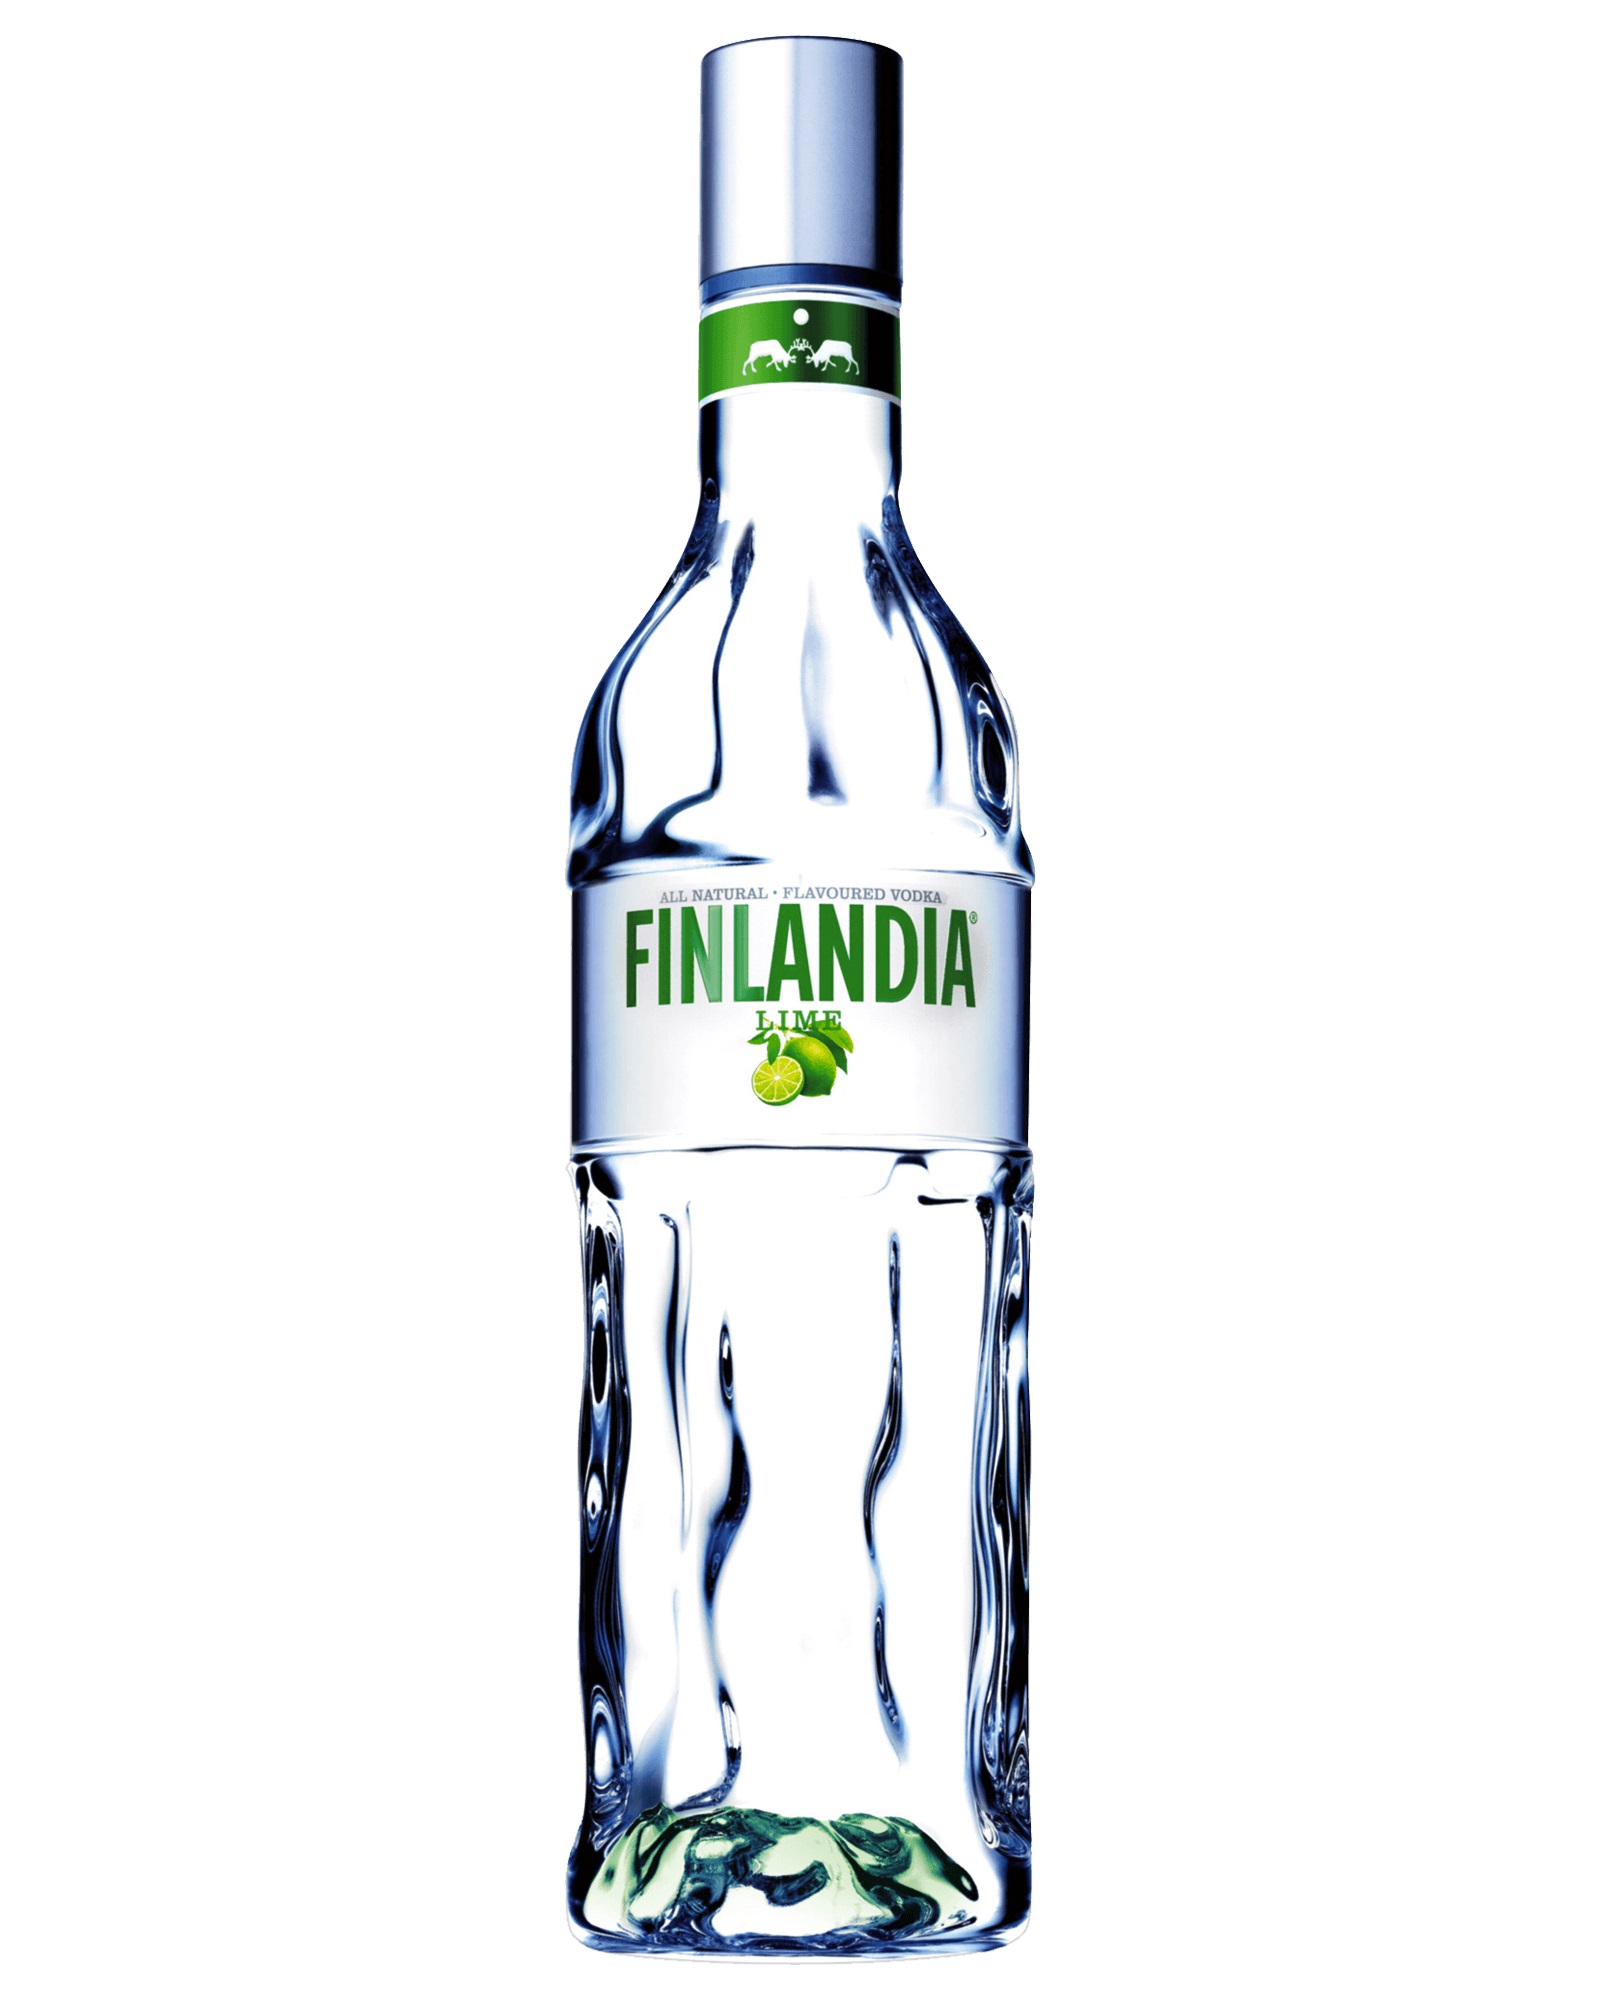 Finlandia Lime 